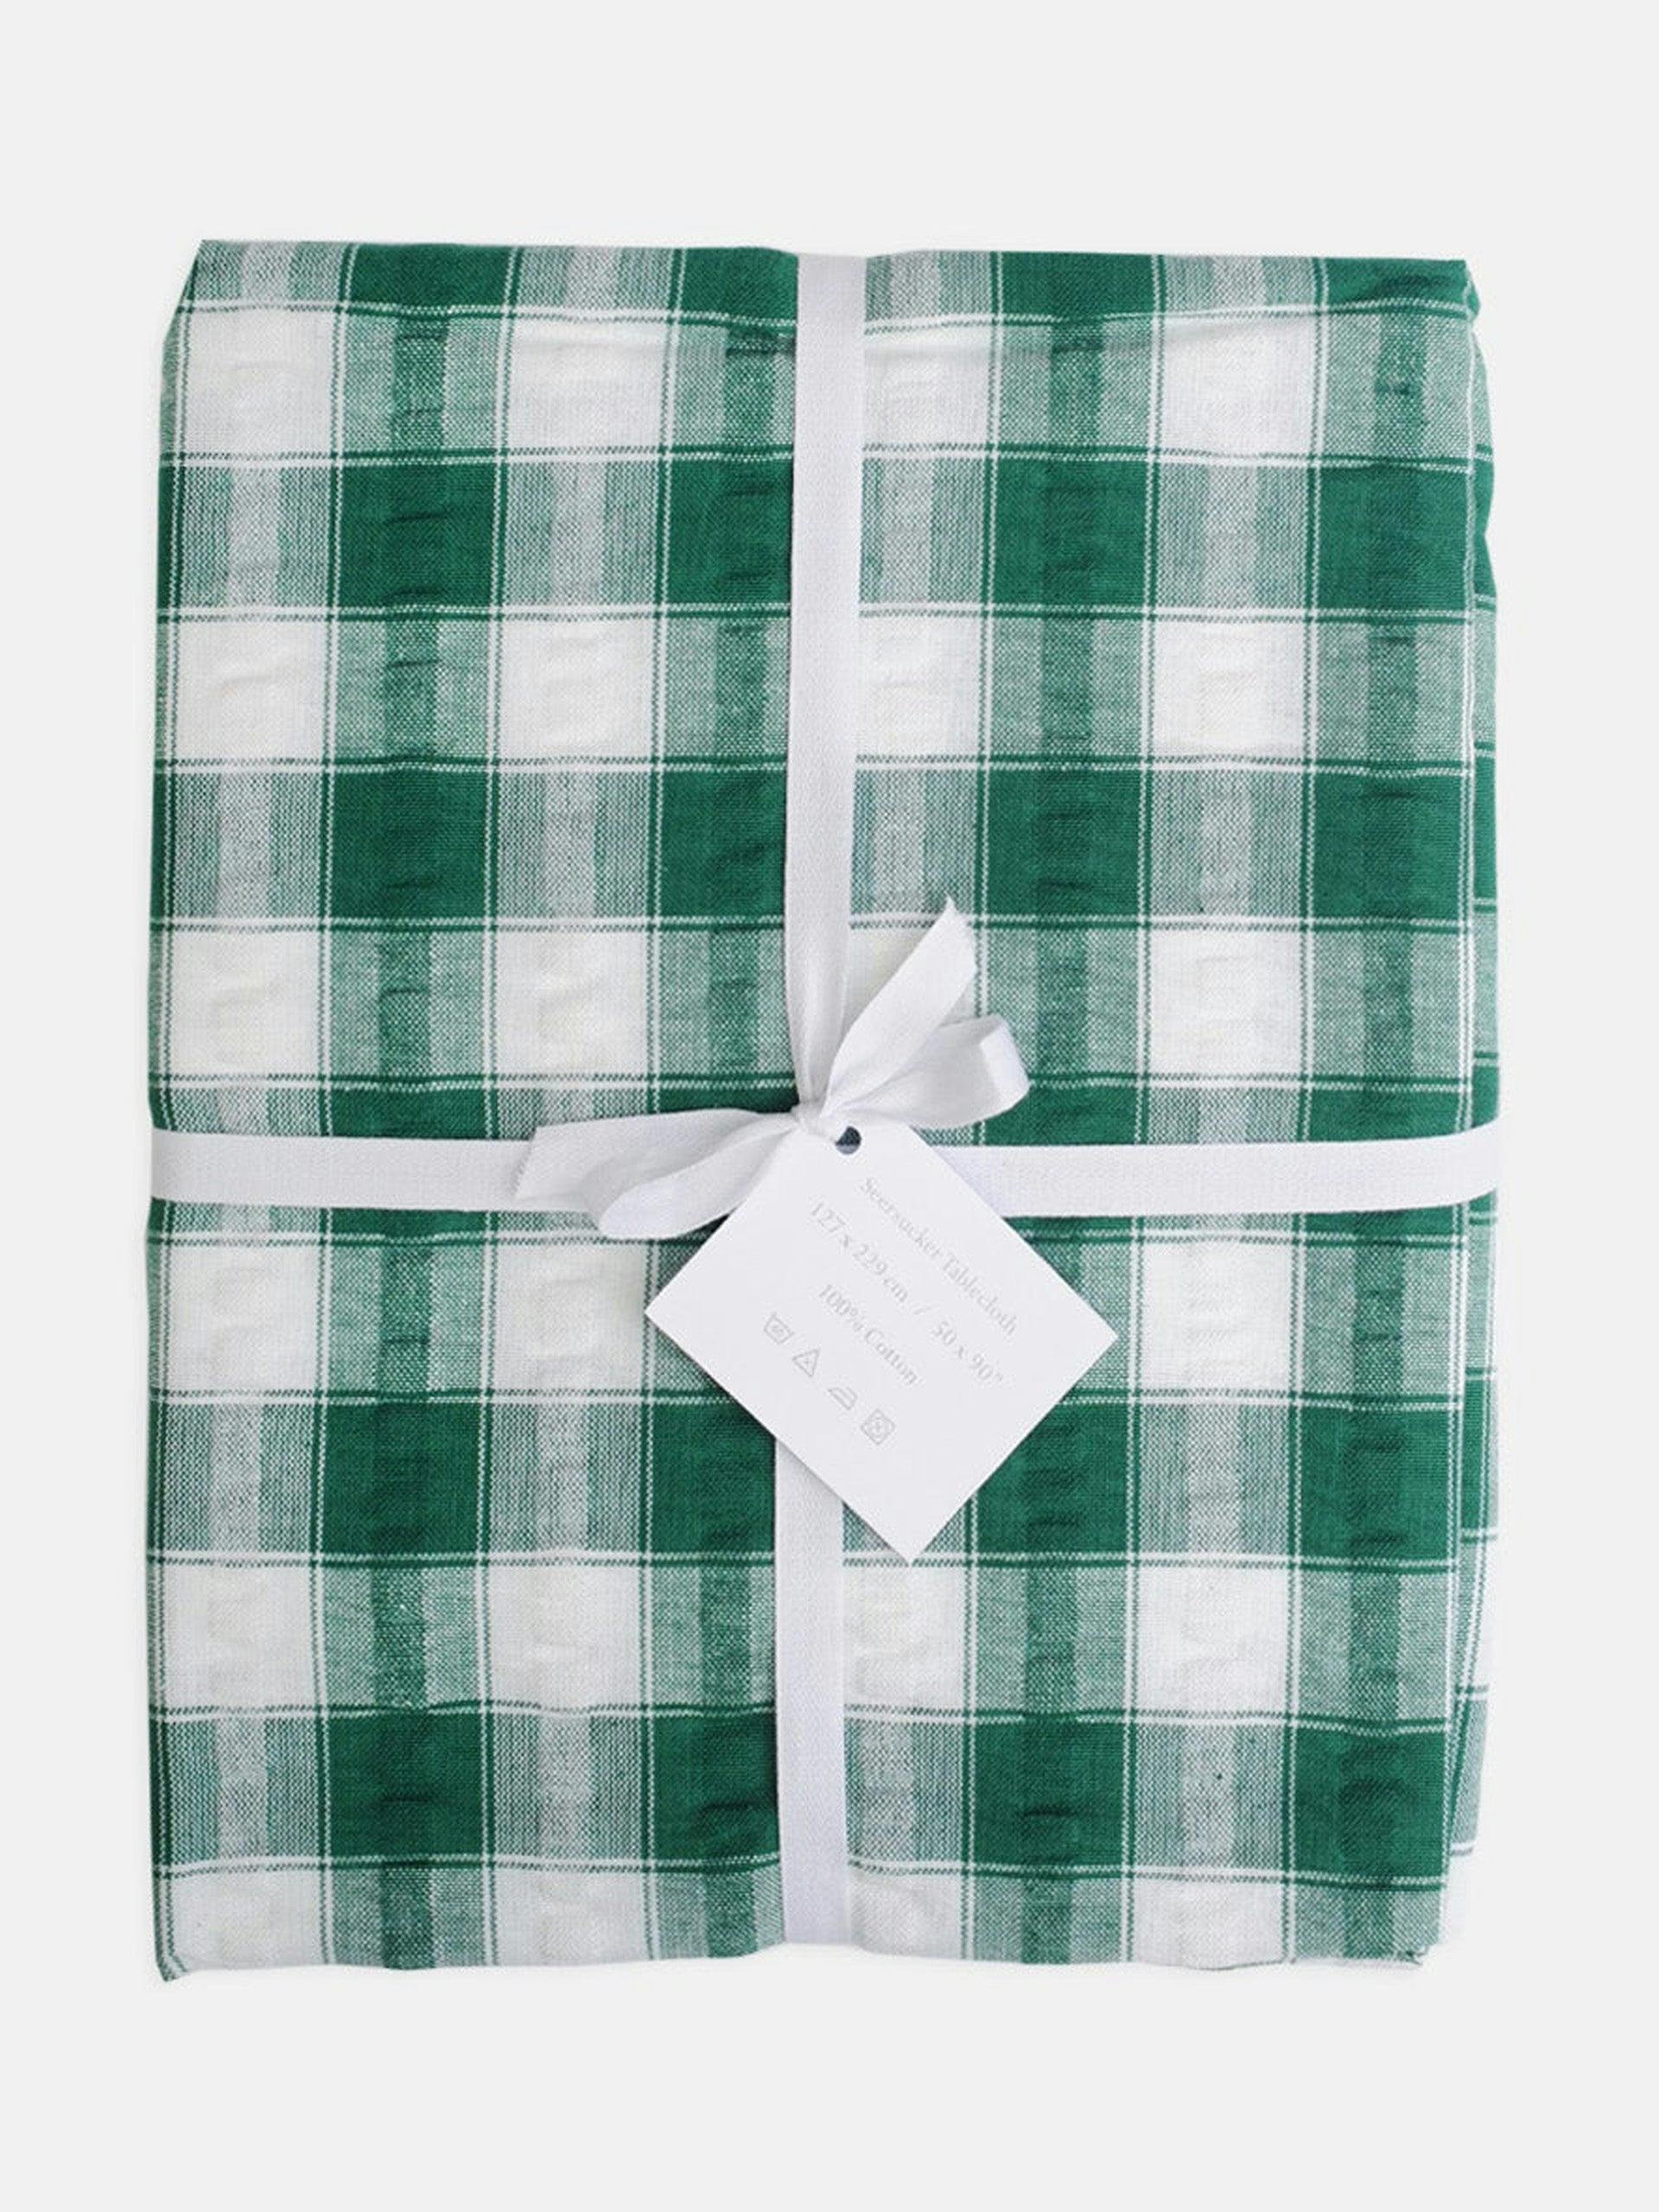 Green check tablecloth